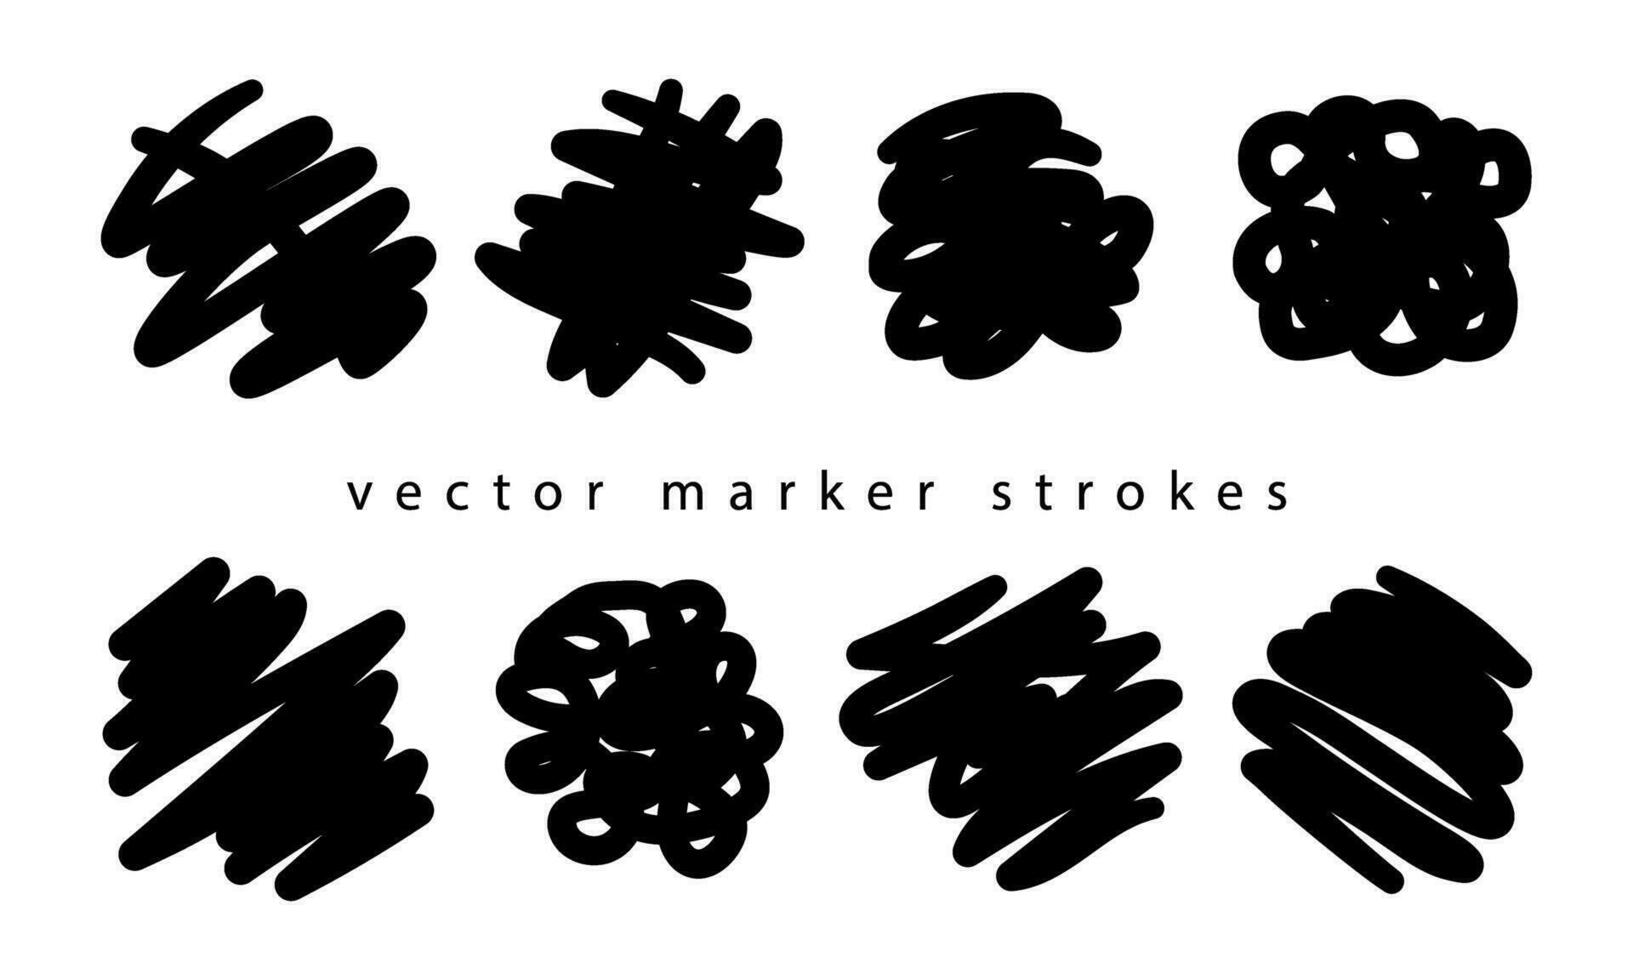 negro realce rayas, pancartas dibujado con marcadores elegante carrera elementos para diseño. vector pancartas marcador ataque, lugares. aislado en blanco antecedentes